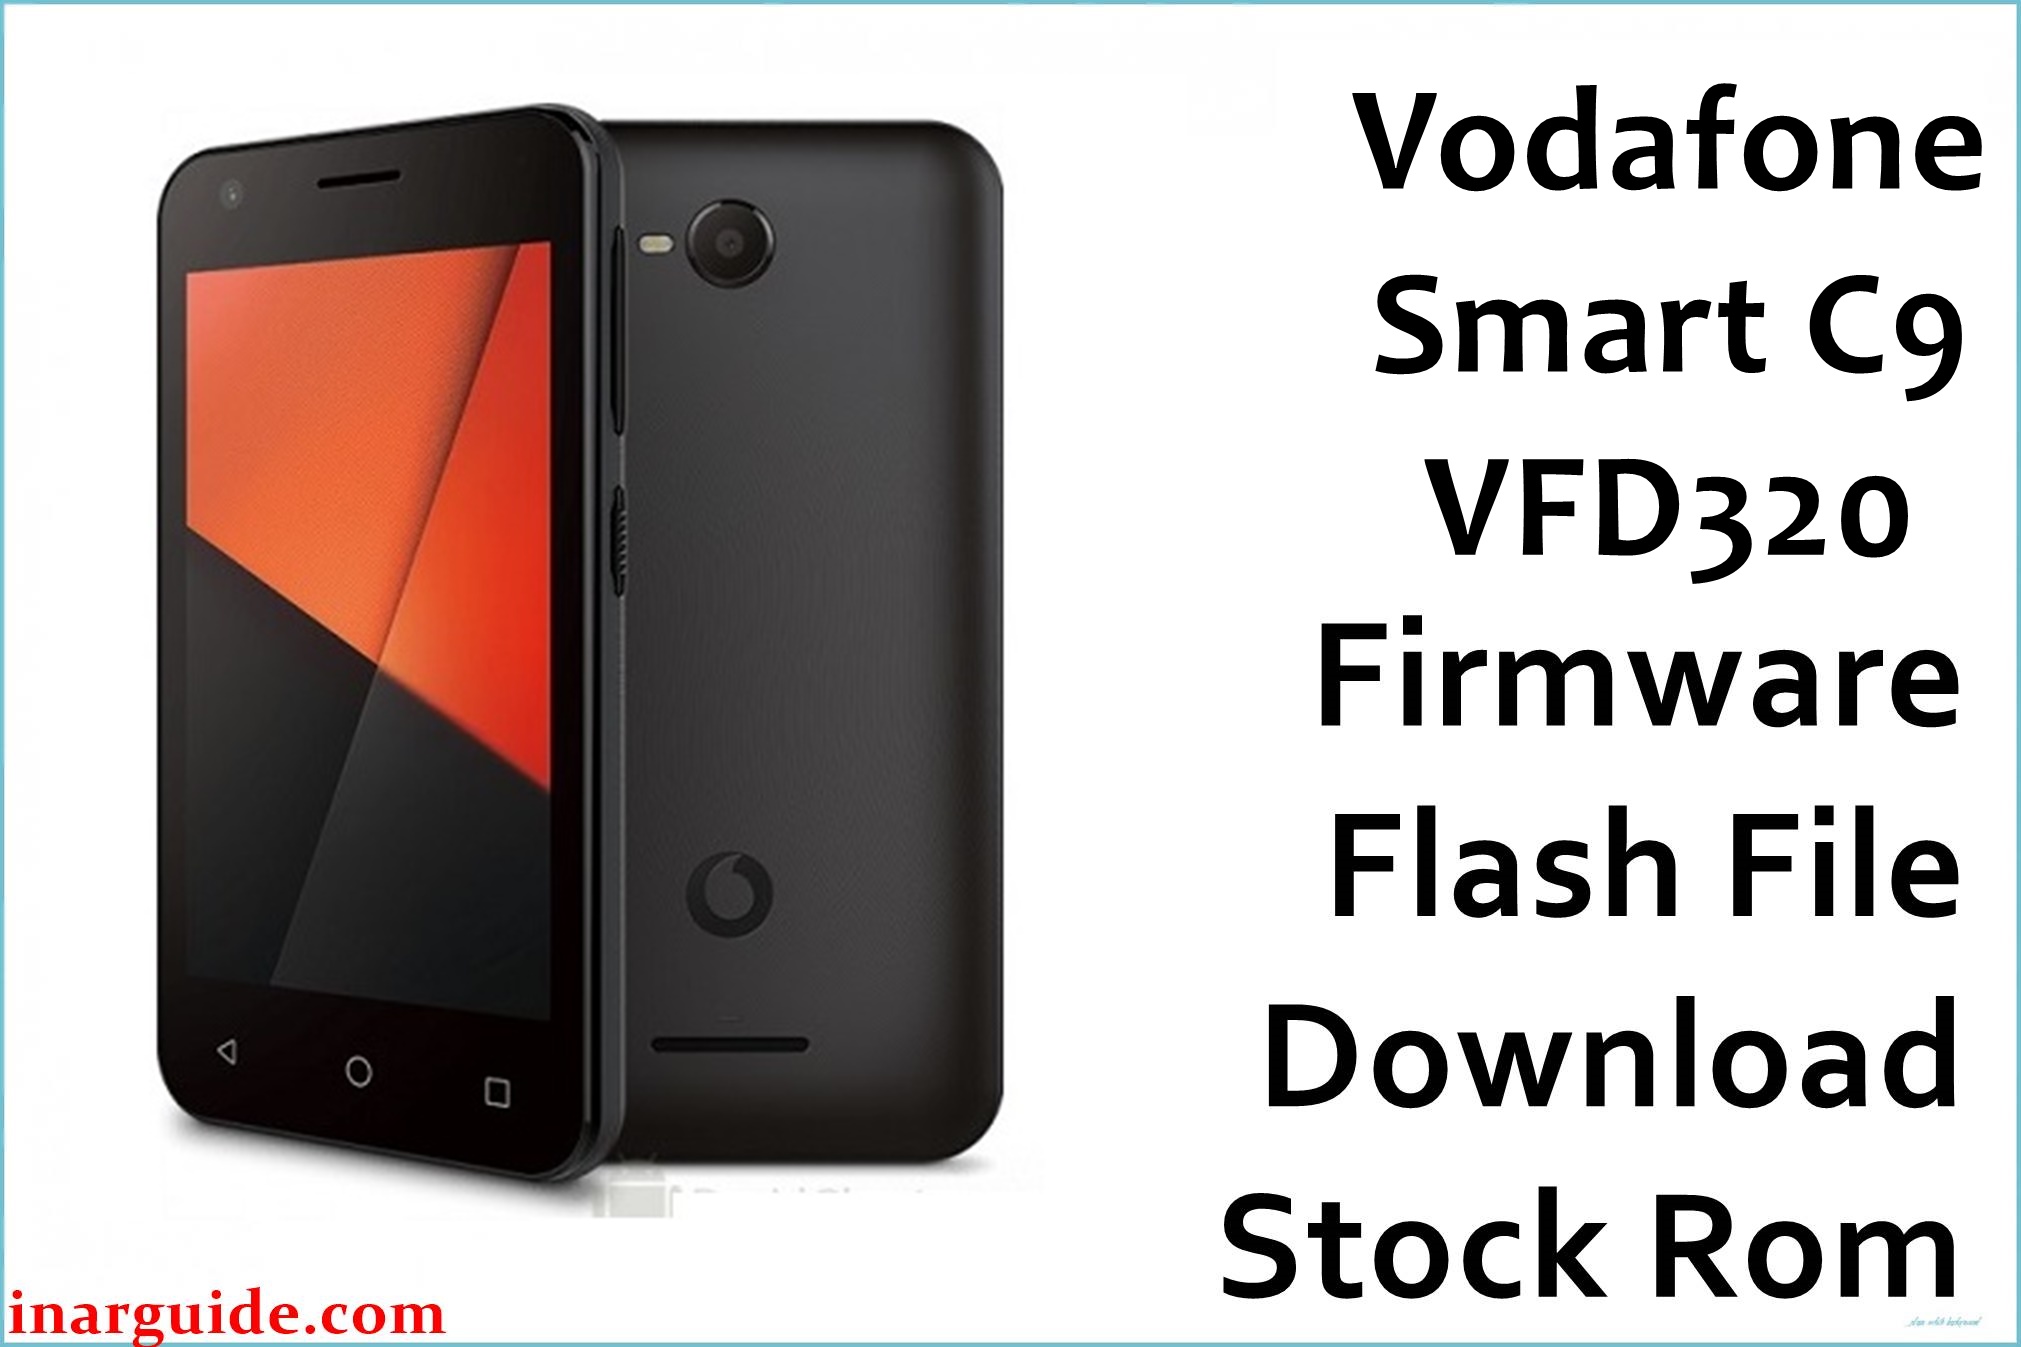 Vodafone Smart C9 VFD320